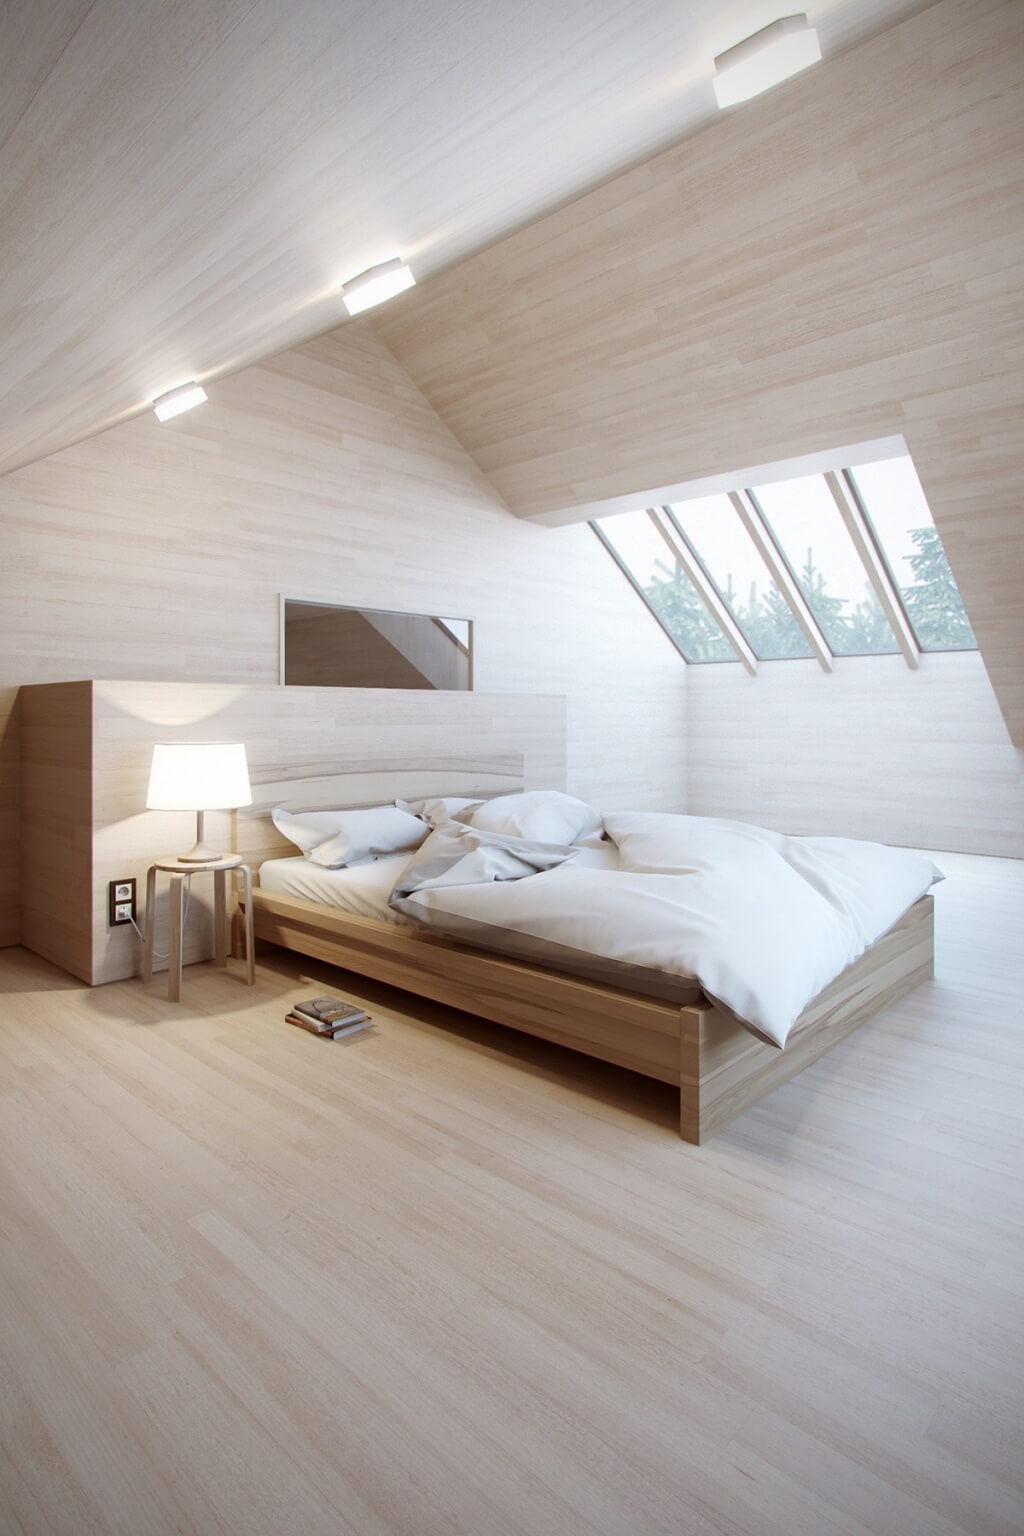 Pleasant bedroom in the attic